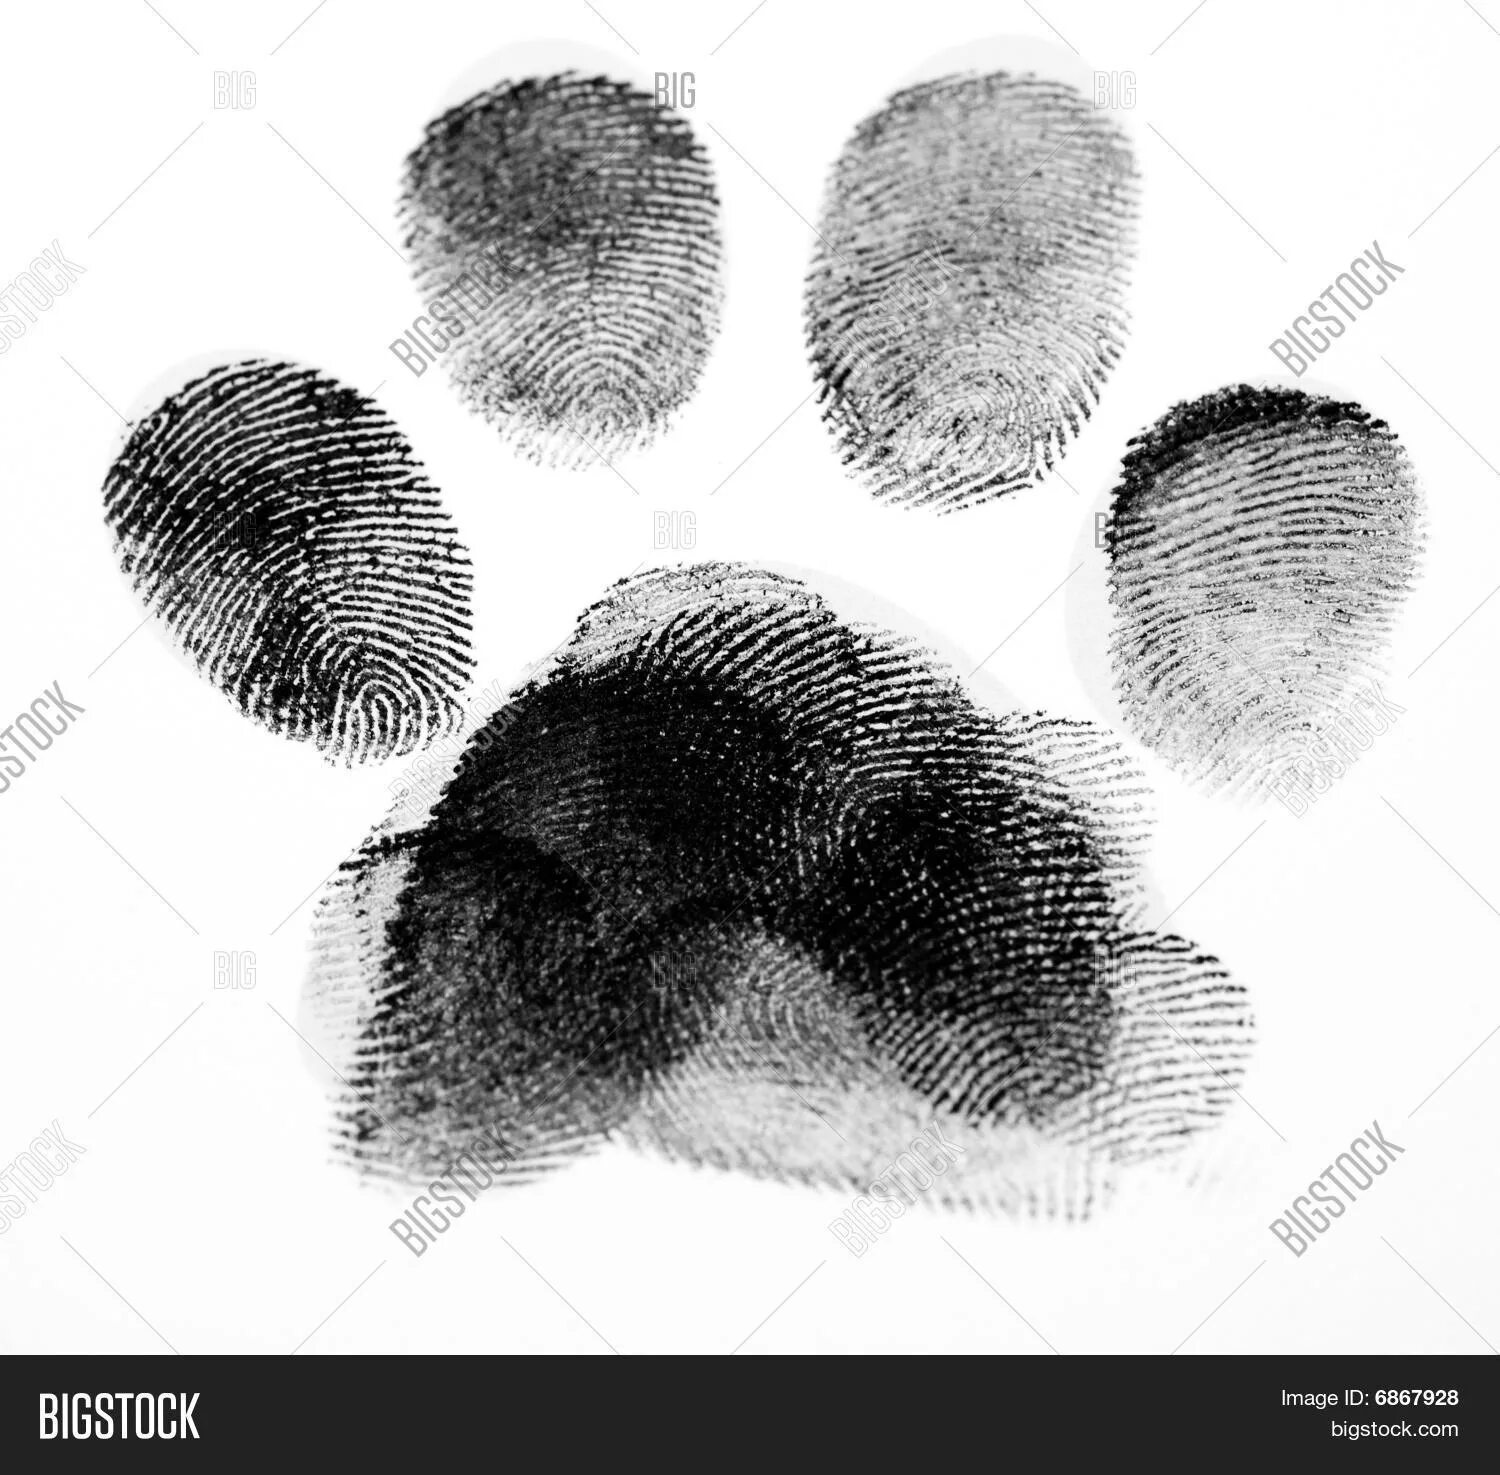 Есть ли отпечатки. Отпечаток носа собаки. Кошачий отпечаток пальцев. Отпечаток пальца собаки. Картина с отпечатками лап.